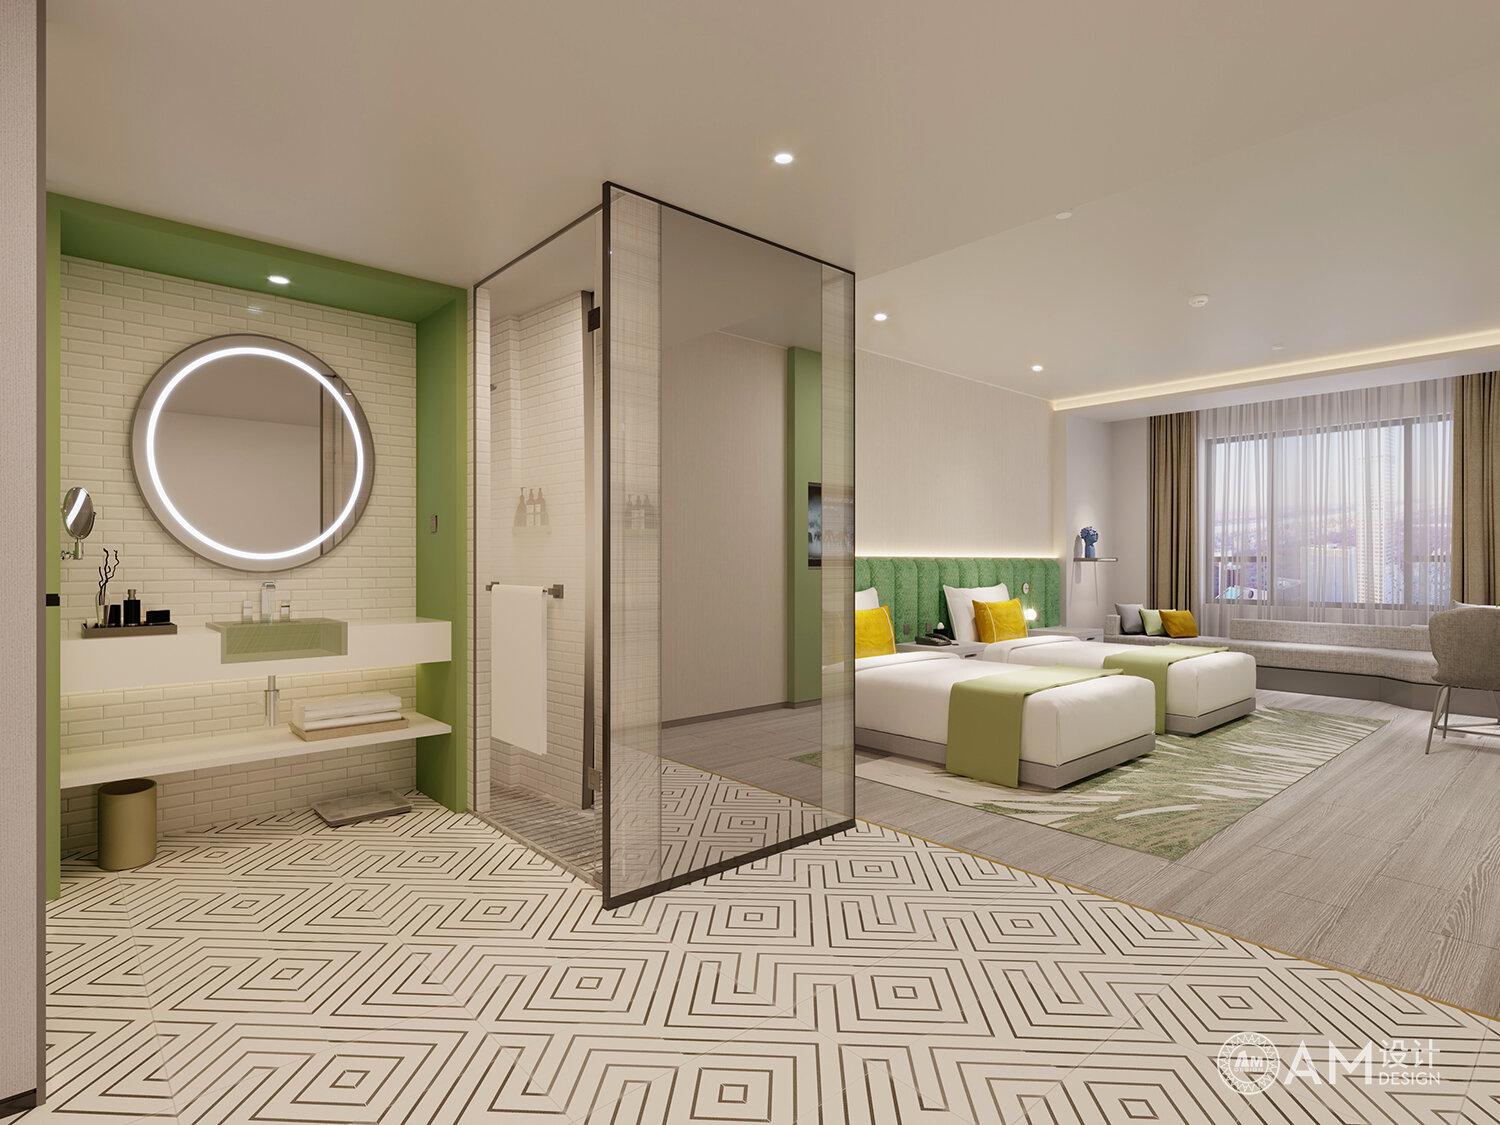 AM DESIGN | Guest room design of Weinan Hotel, Shaanxi